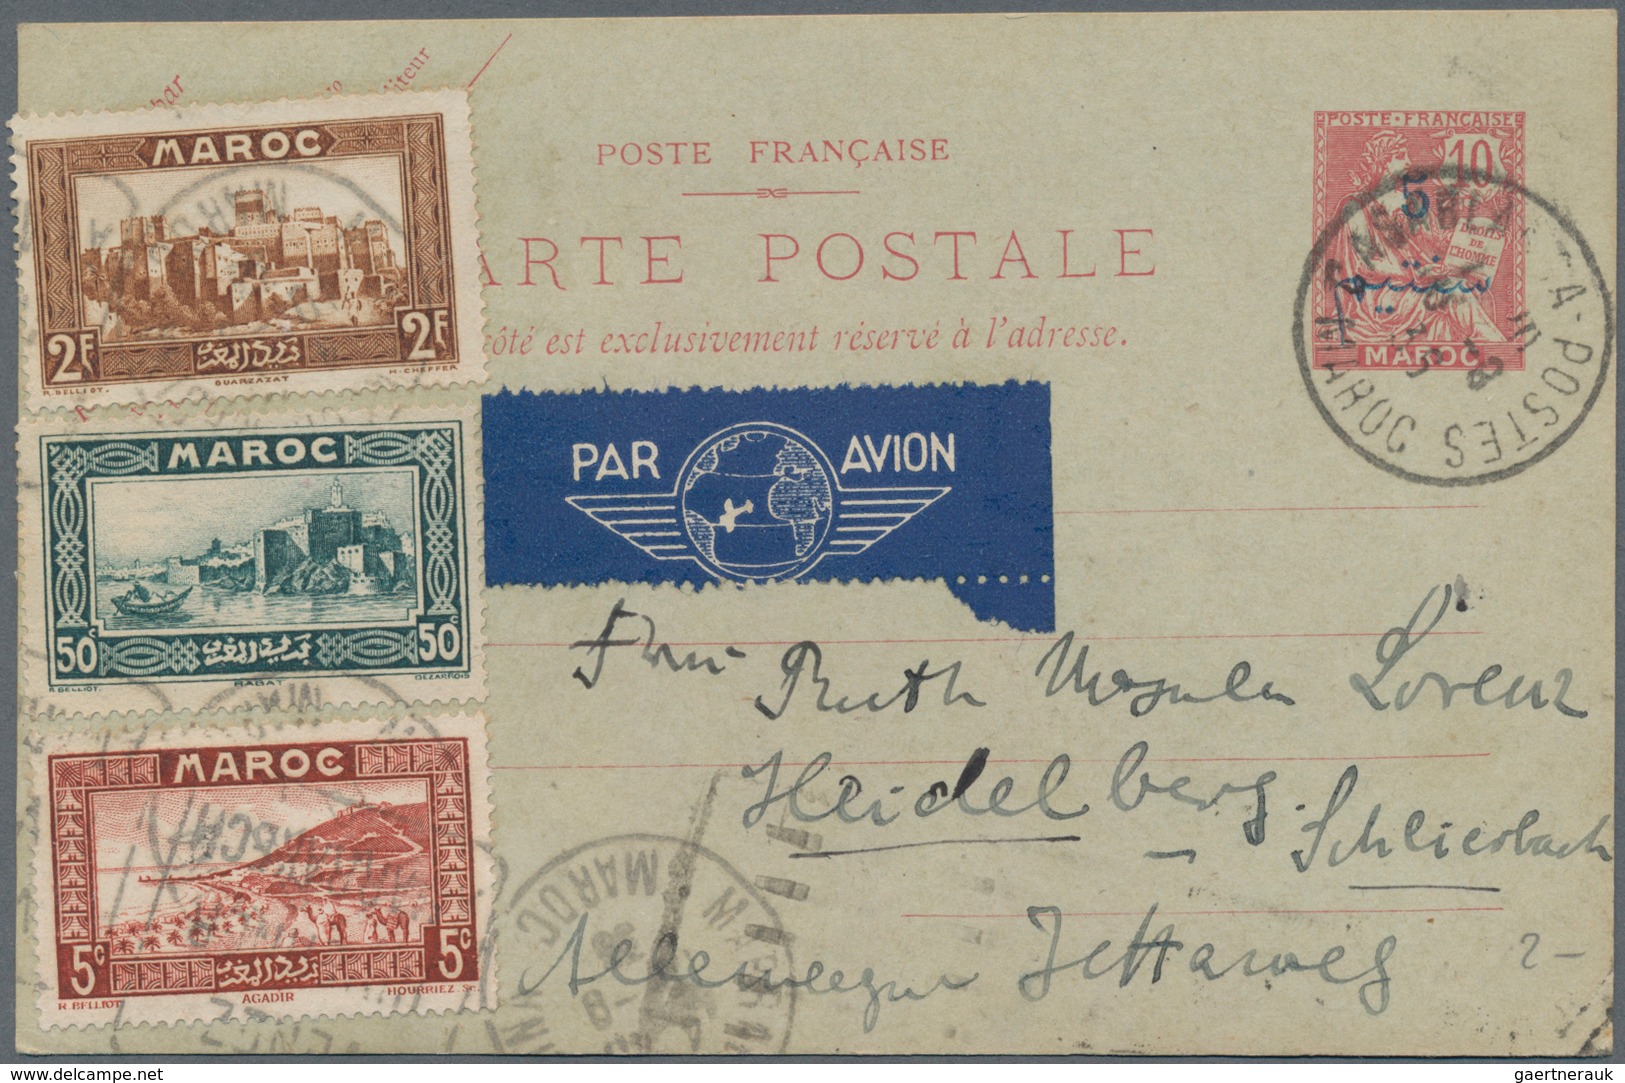 Marokko: 1936: Maroc P/s Card 5c. On 10c., Uprated 2f., 50c. And 5c., Used To Germany Per Airmail. I - Ongebruikt